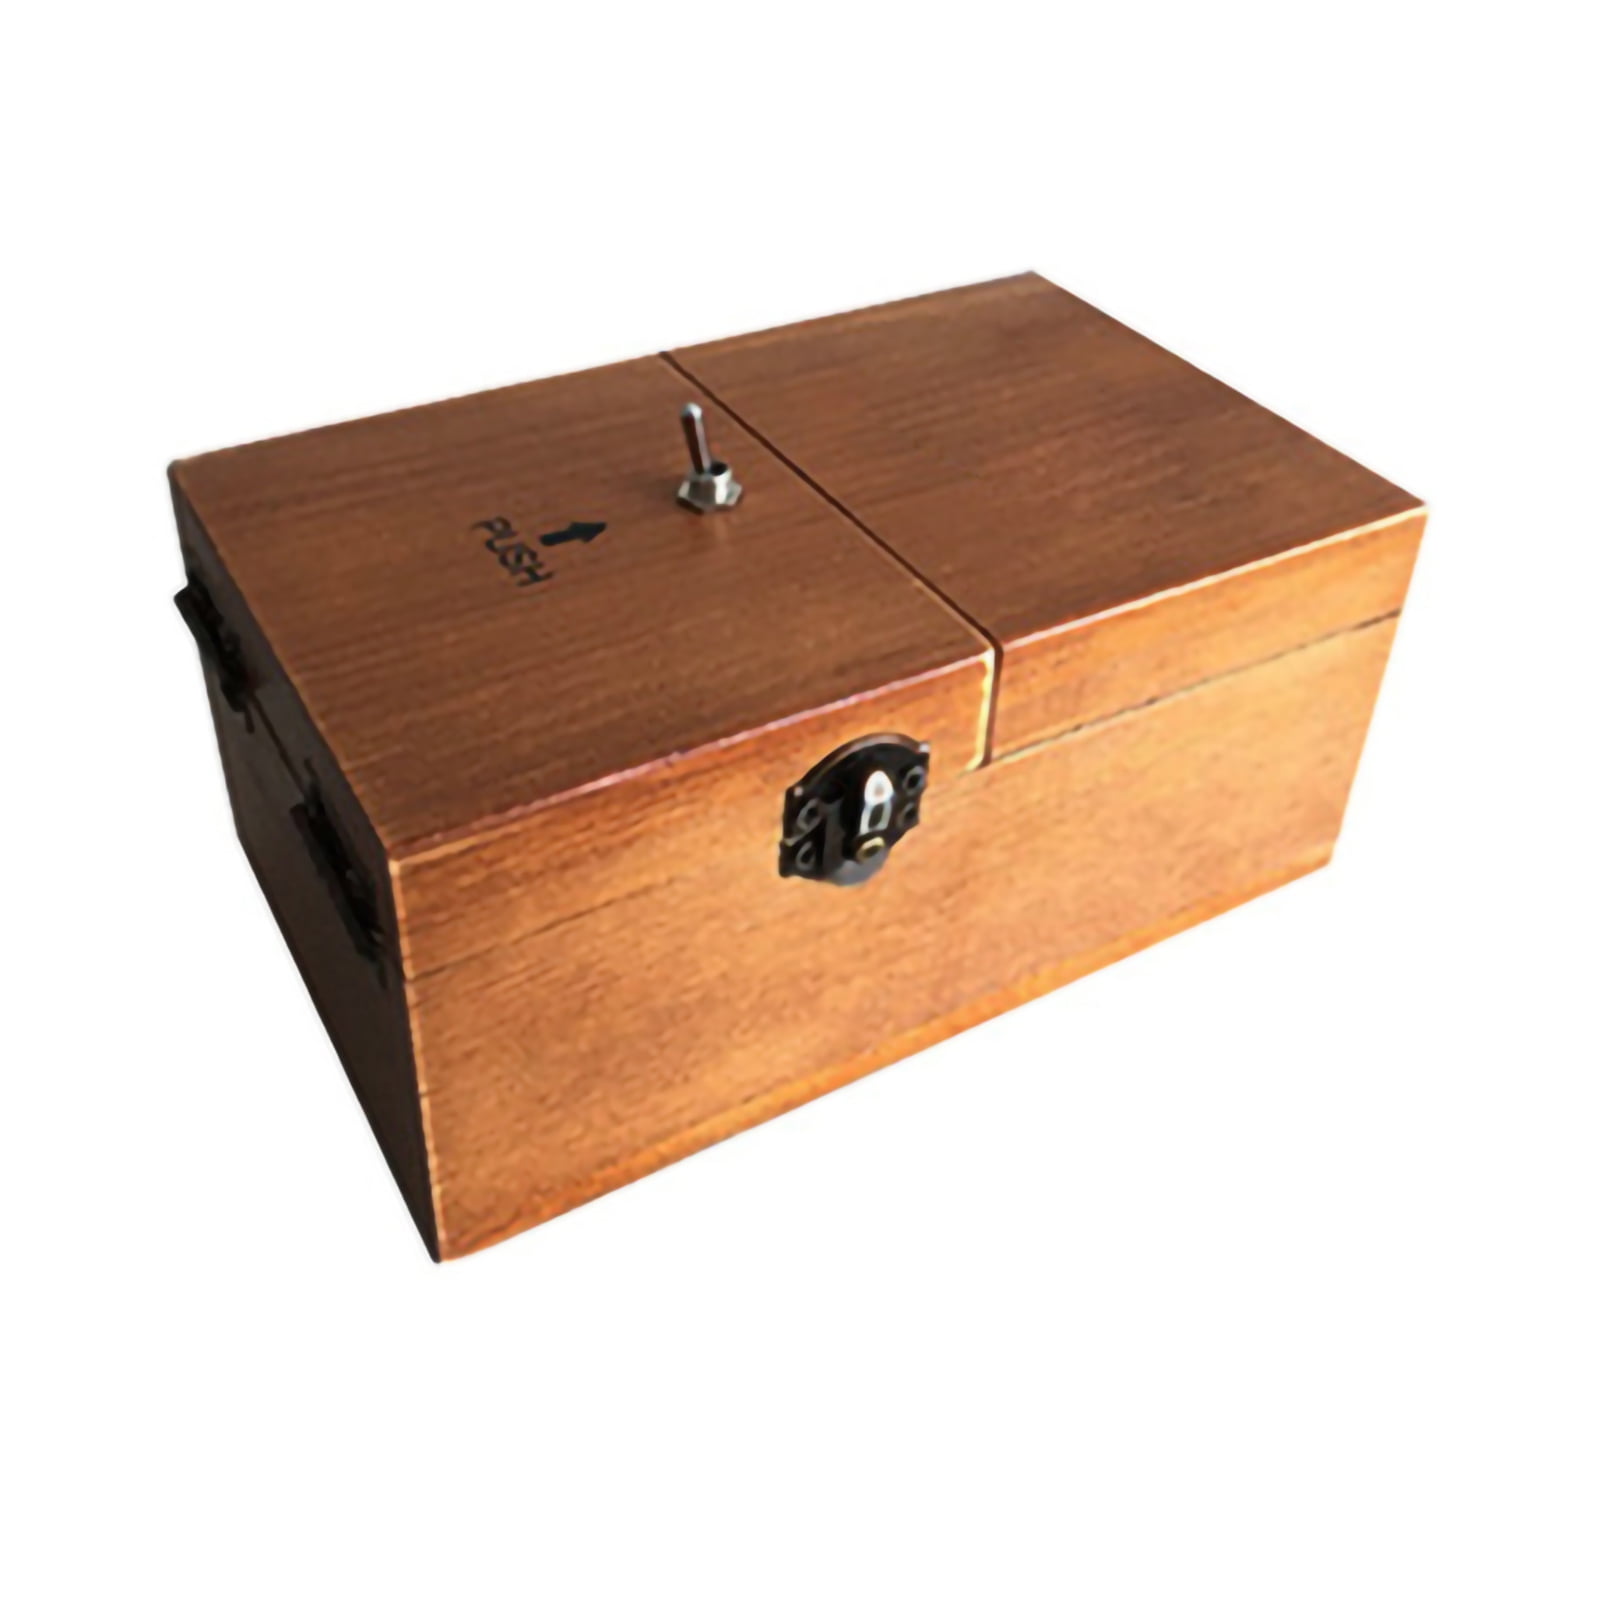 Useless Box | Diy electronic kits, Useless, Cube storage